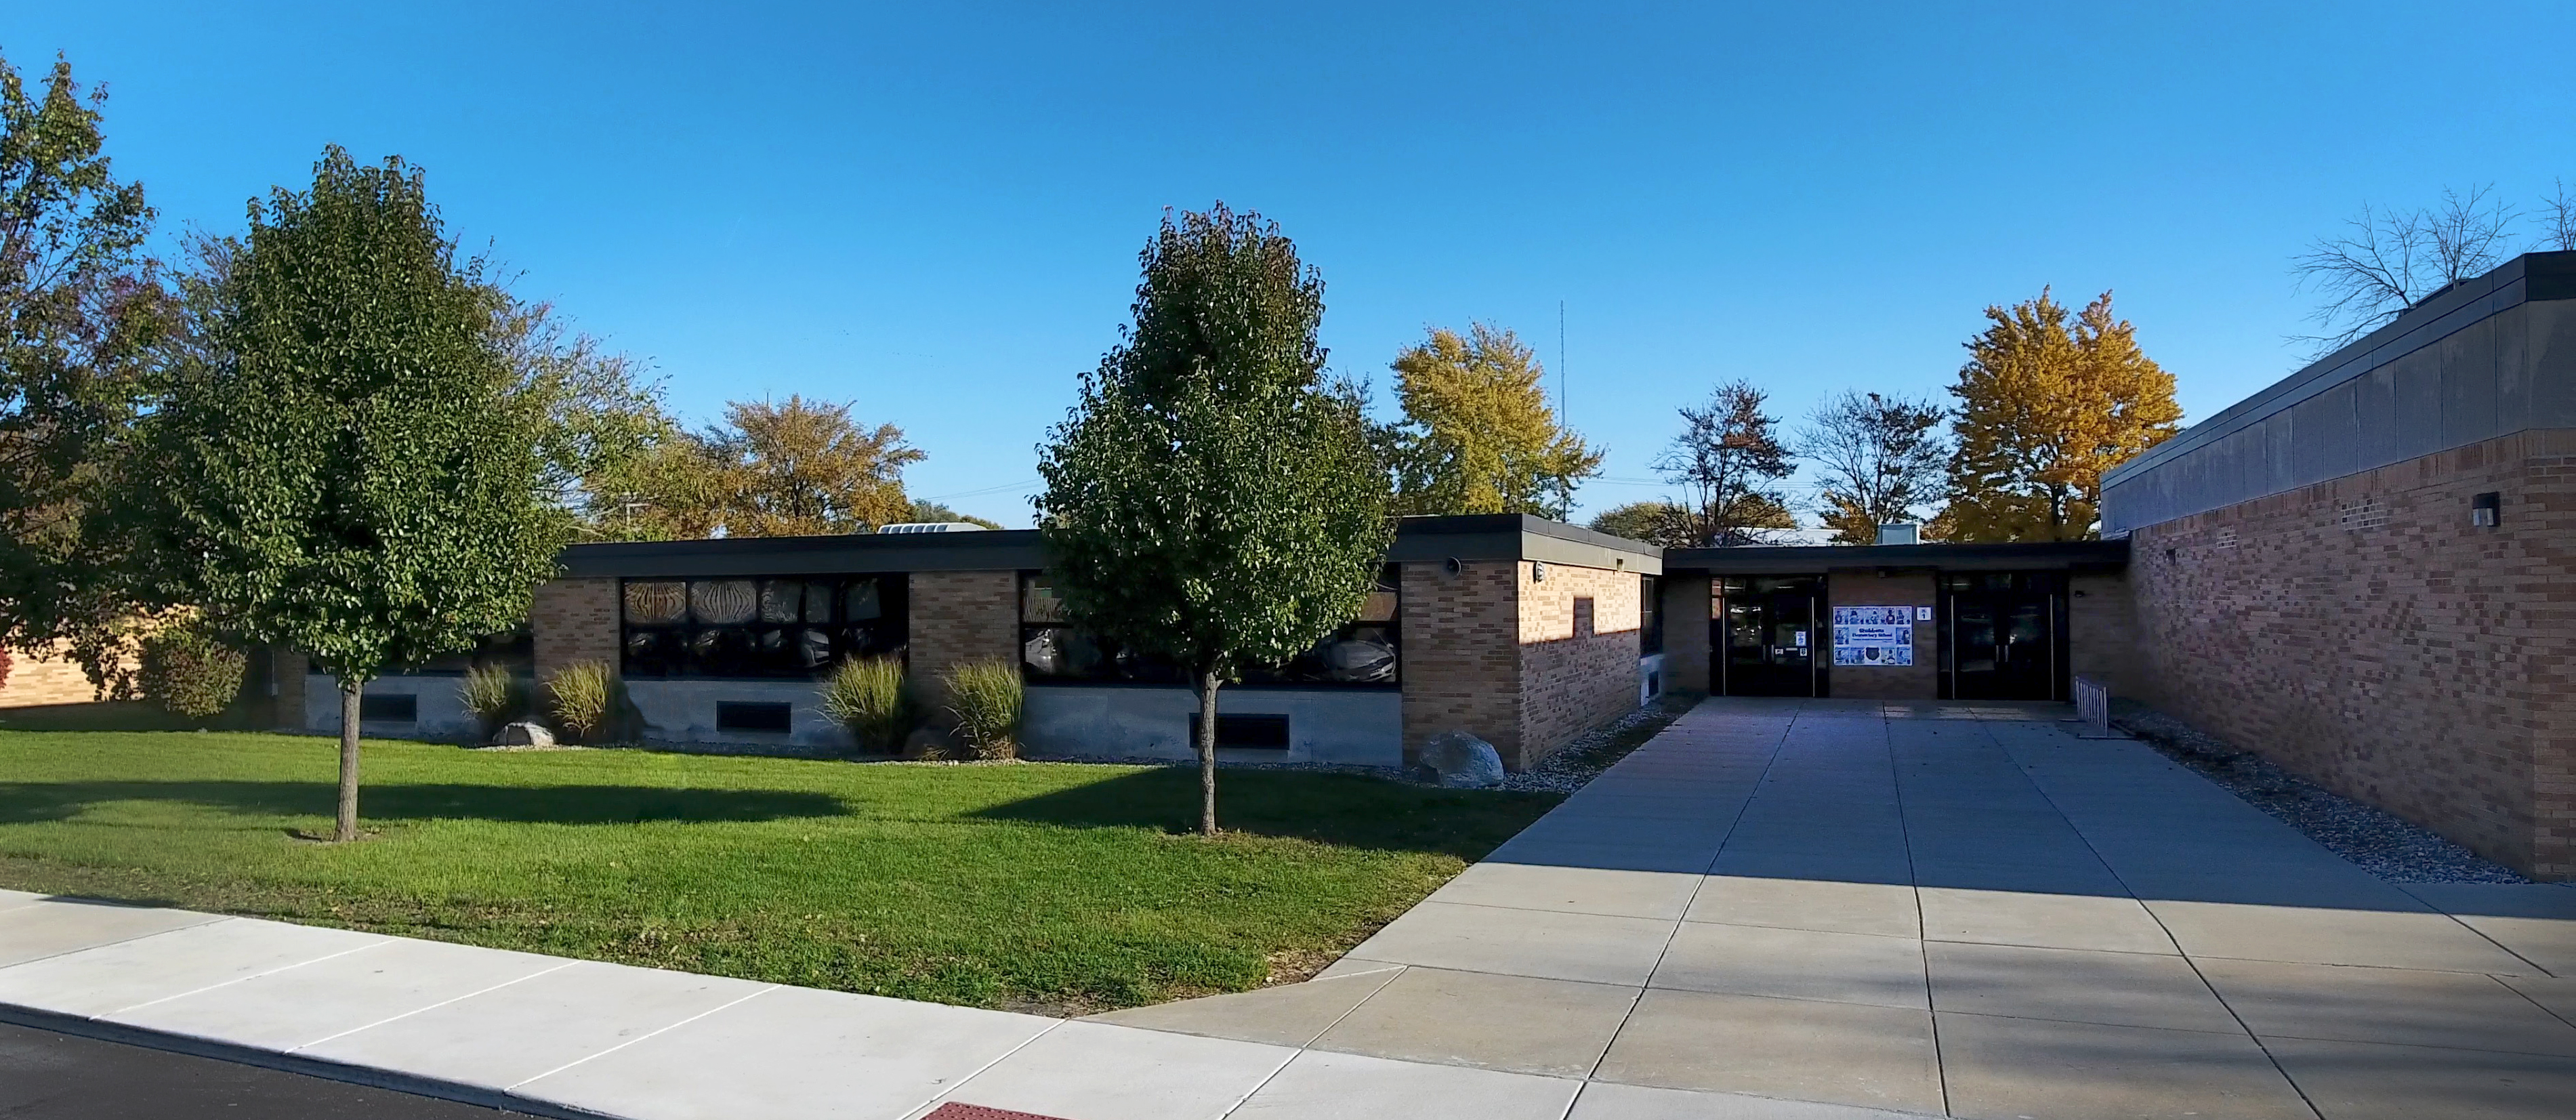 Image of Shabbona Elementary School